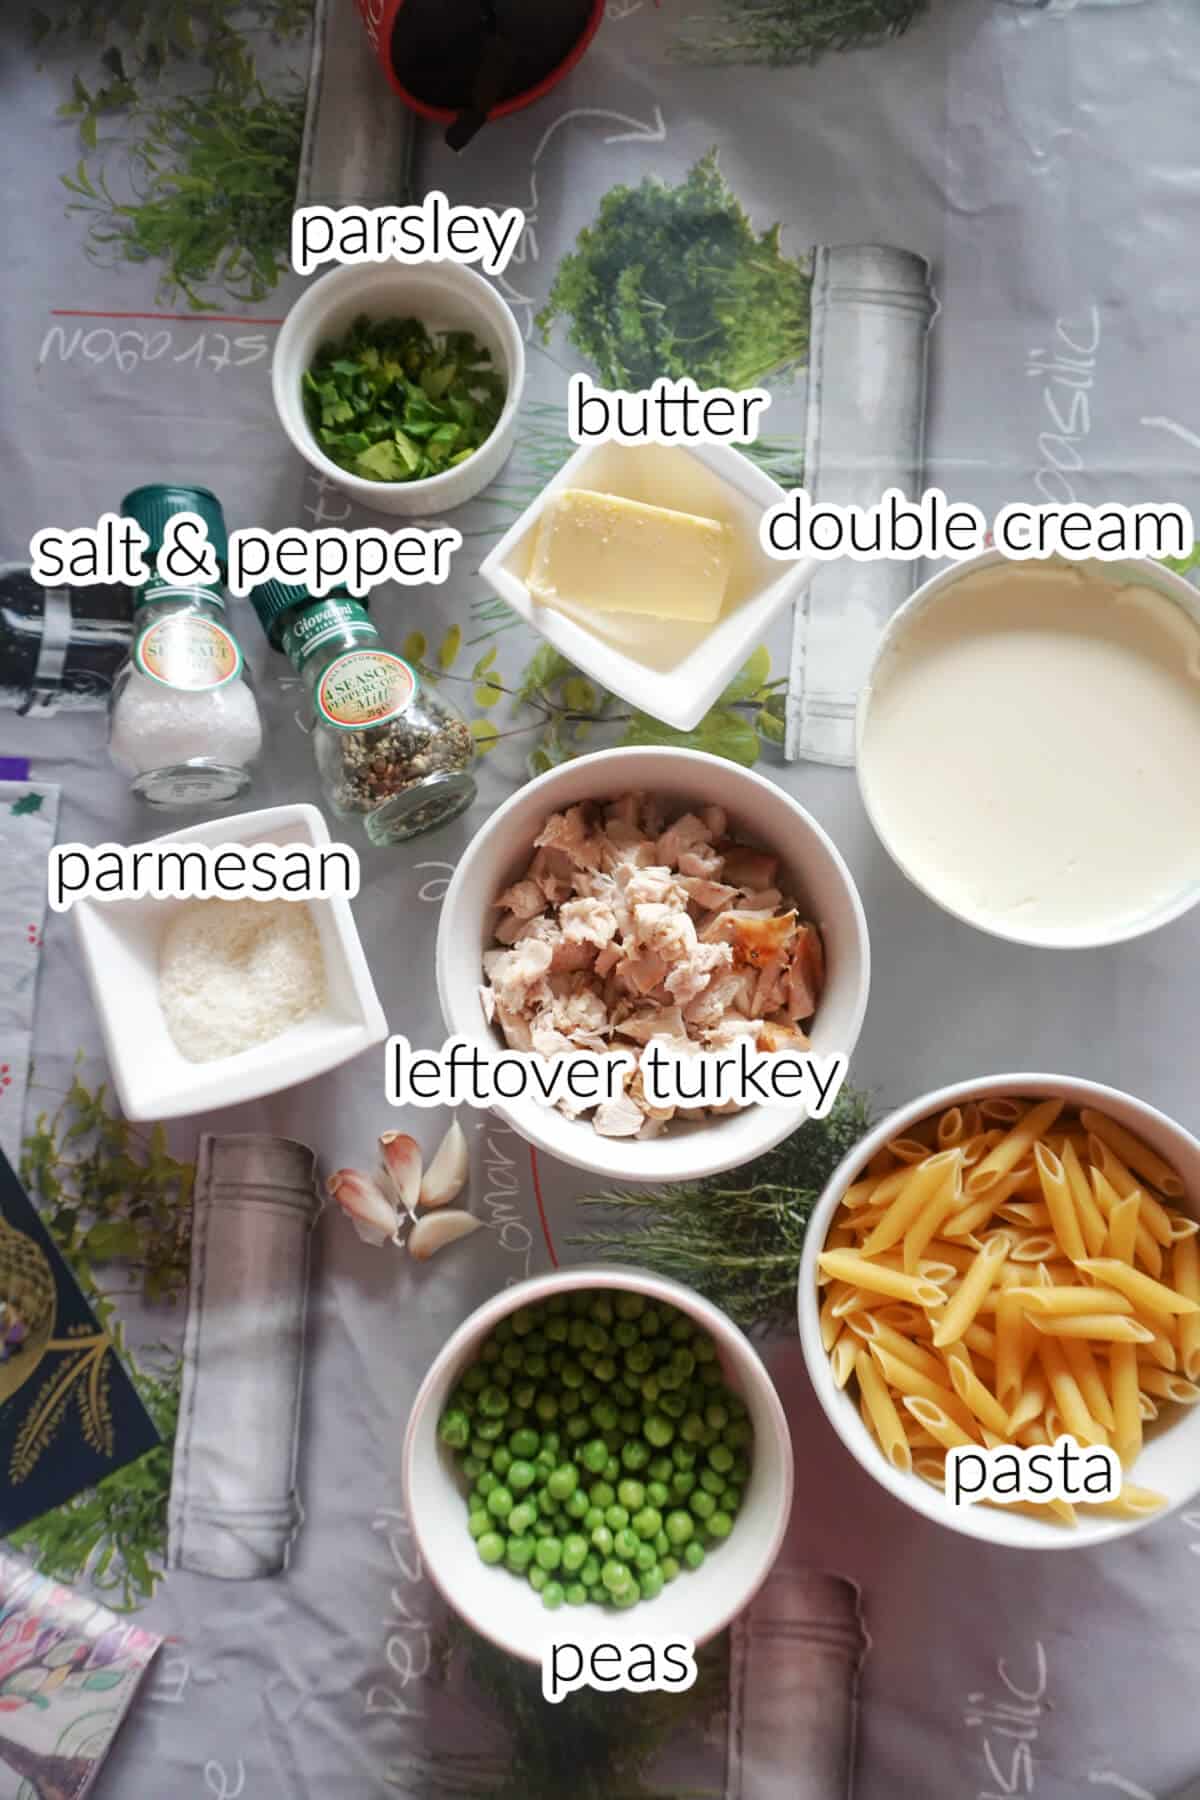 Ingredients needed to make leftover turkey pasta.